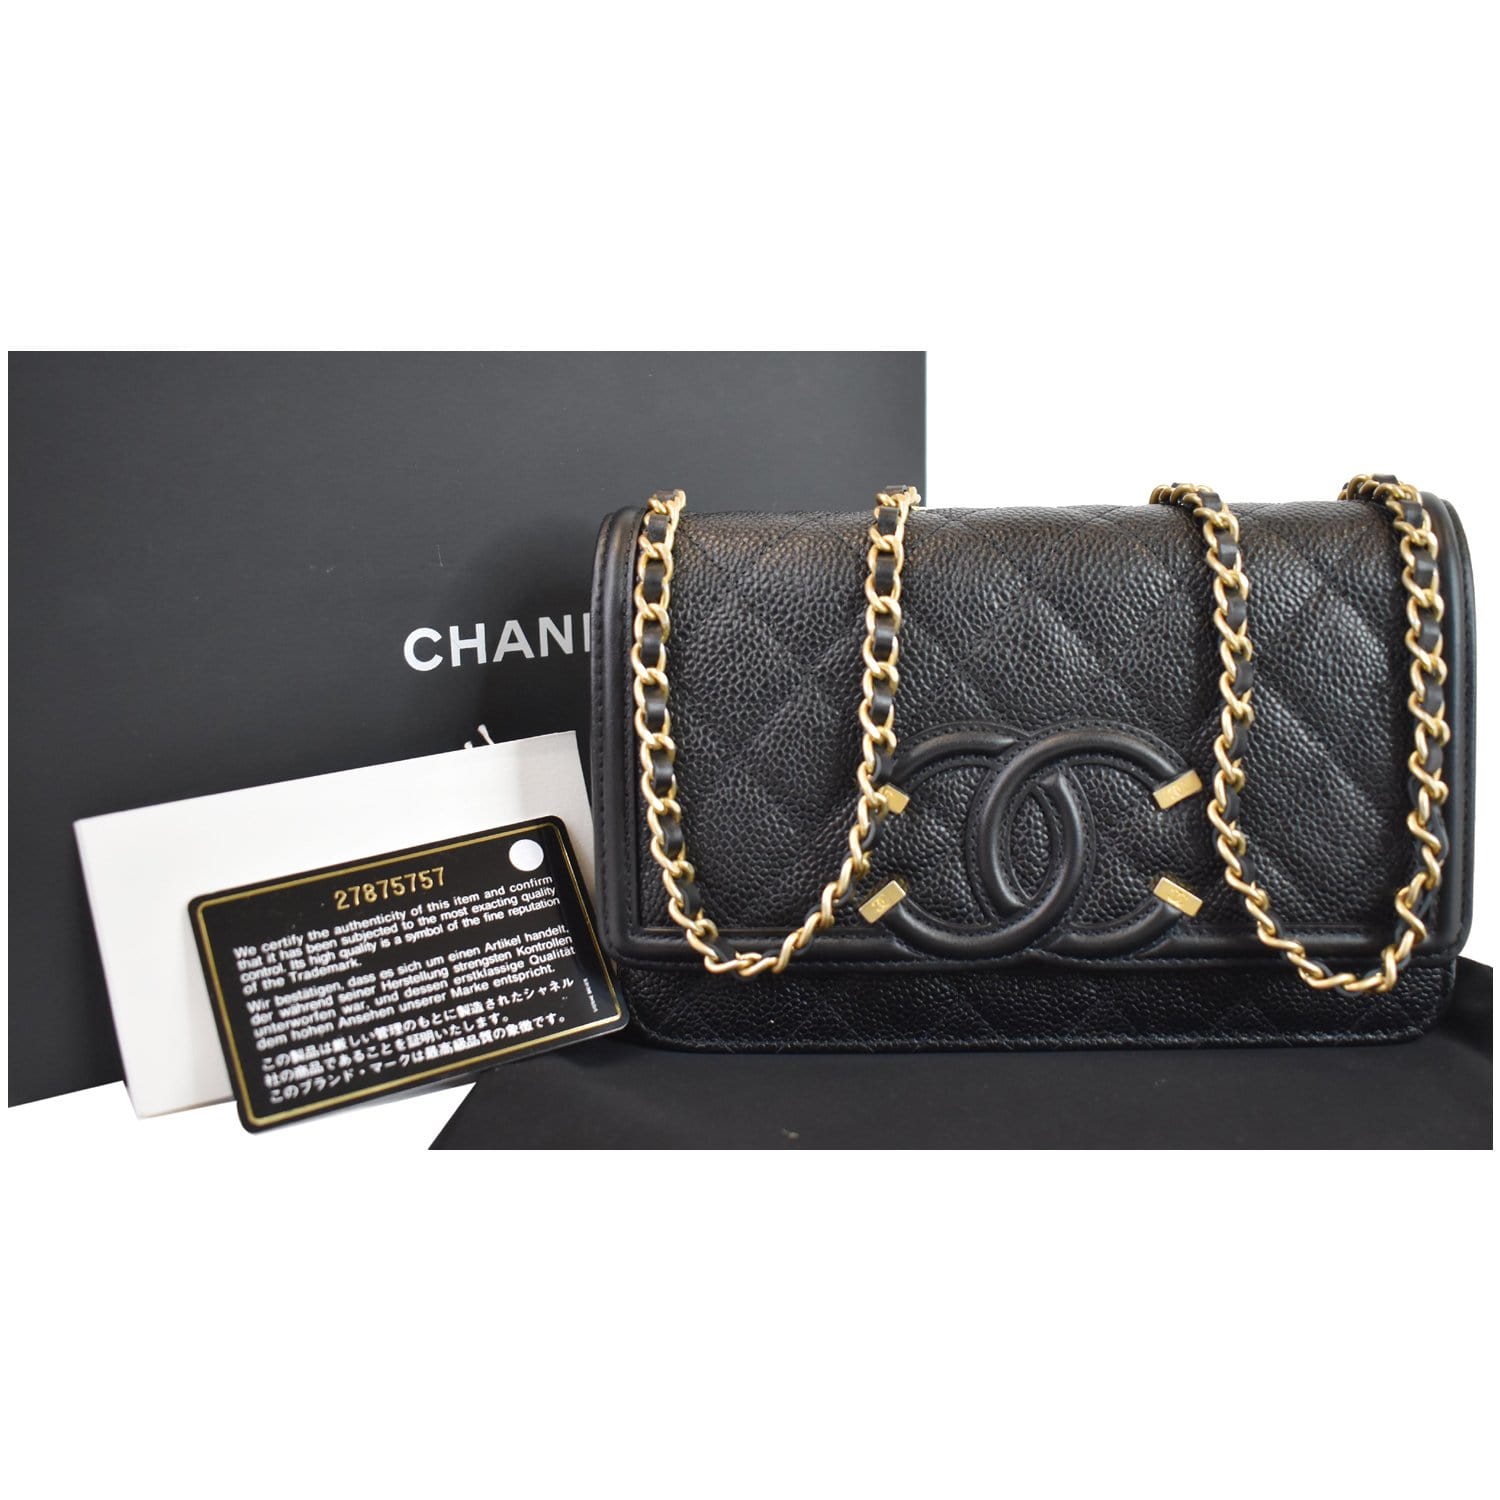 chanel vanity case bag price